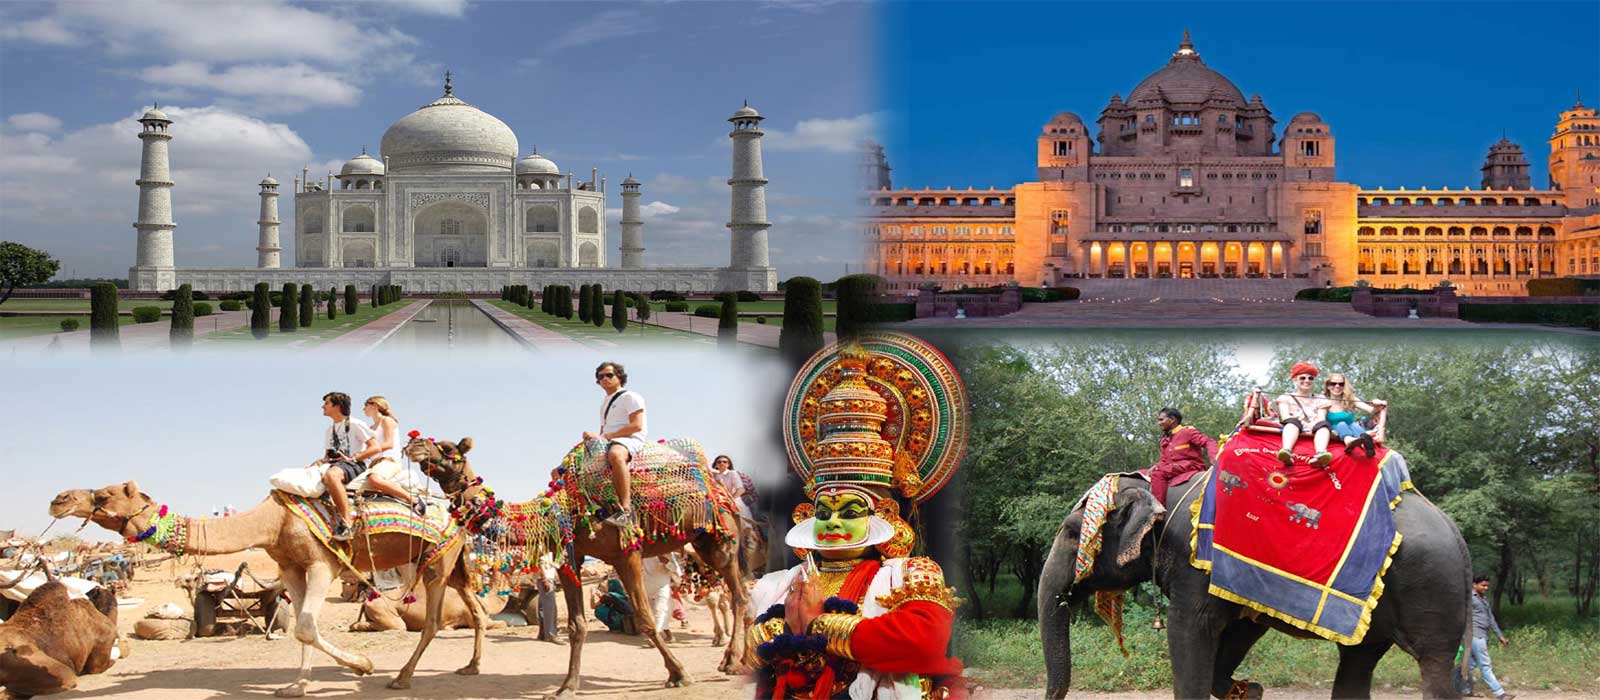 top tour operators in delhi